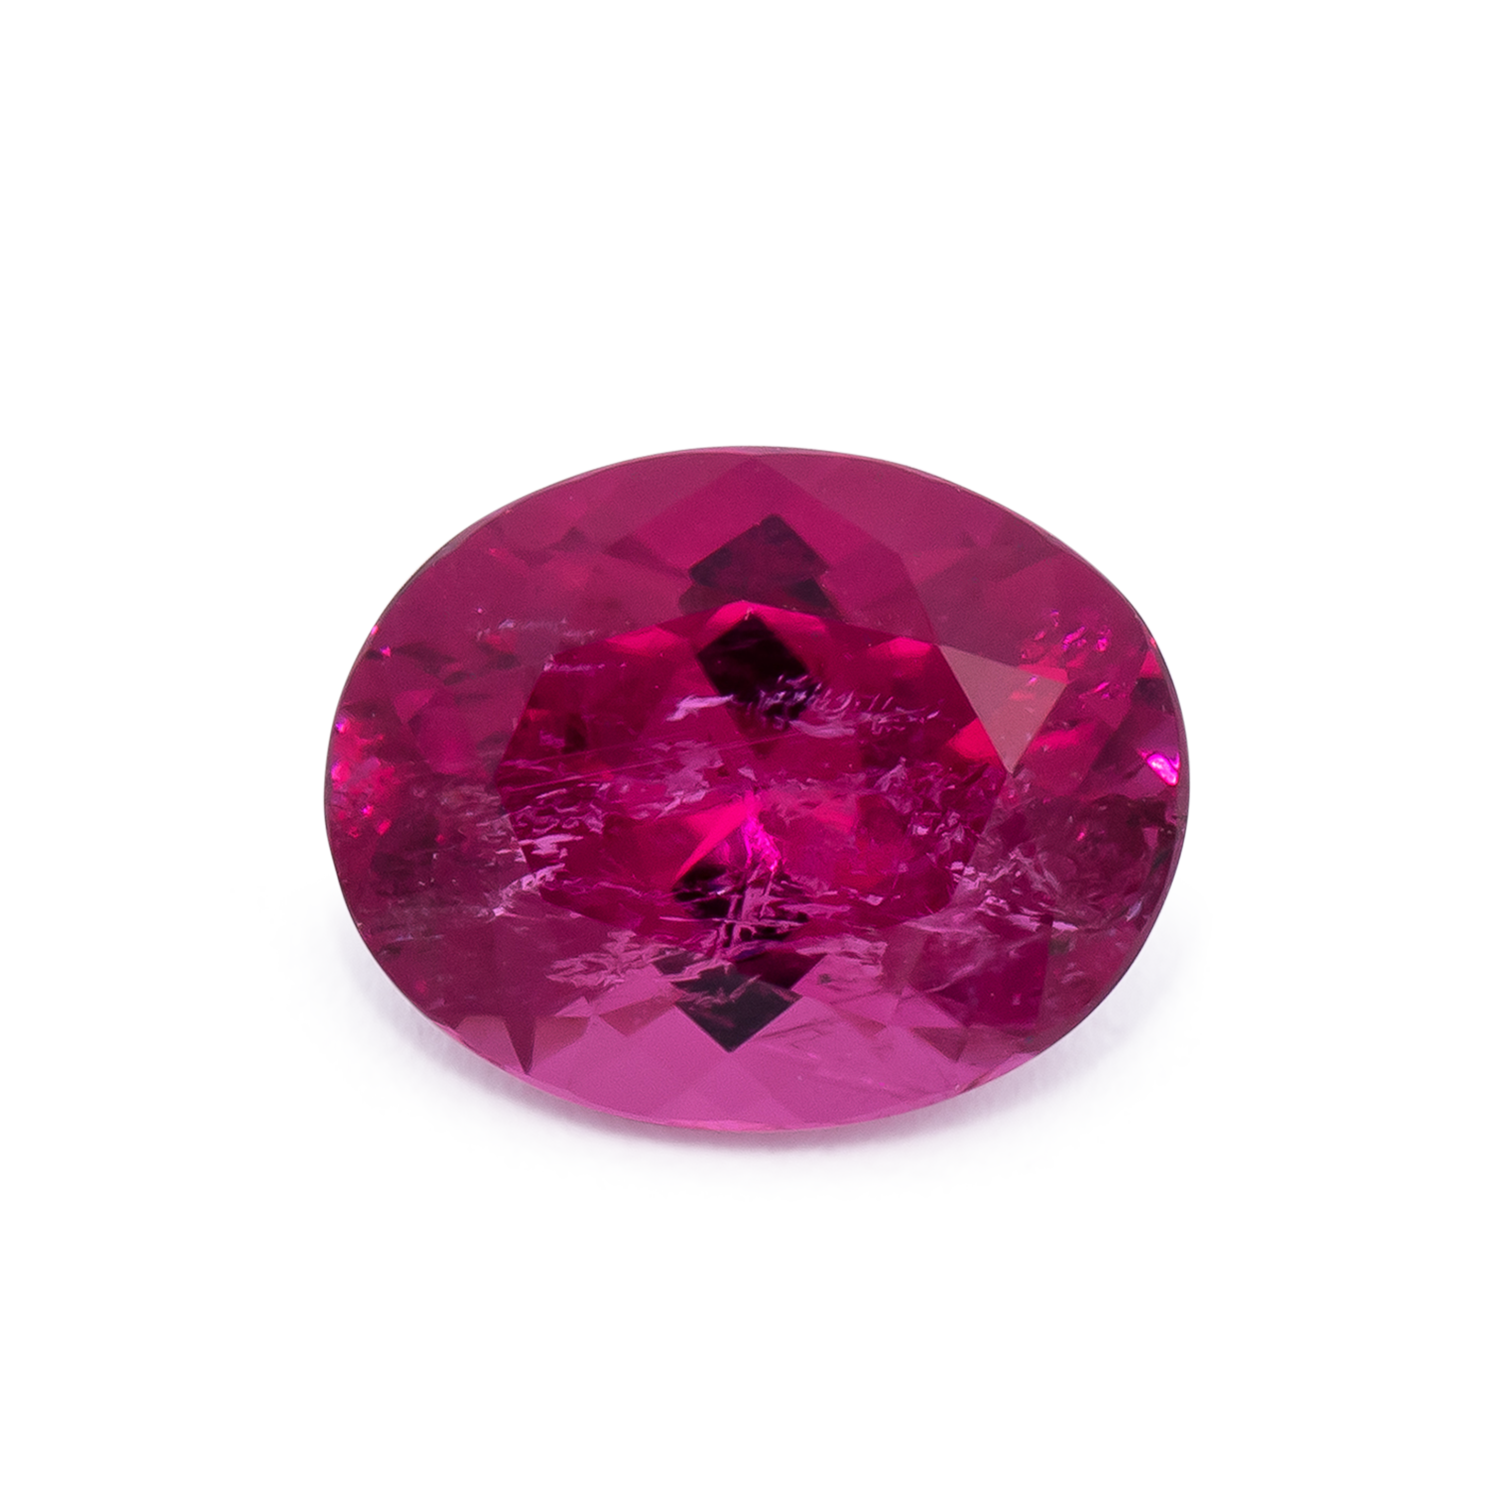 Rubellit - rosa, oval, 8.8x7 mm, 1.70 cts, Nr. RUB15004